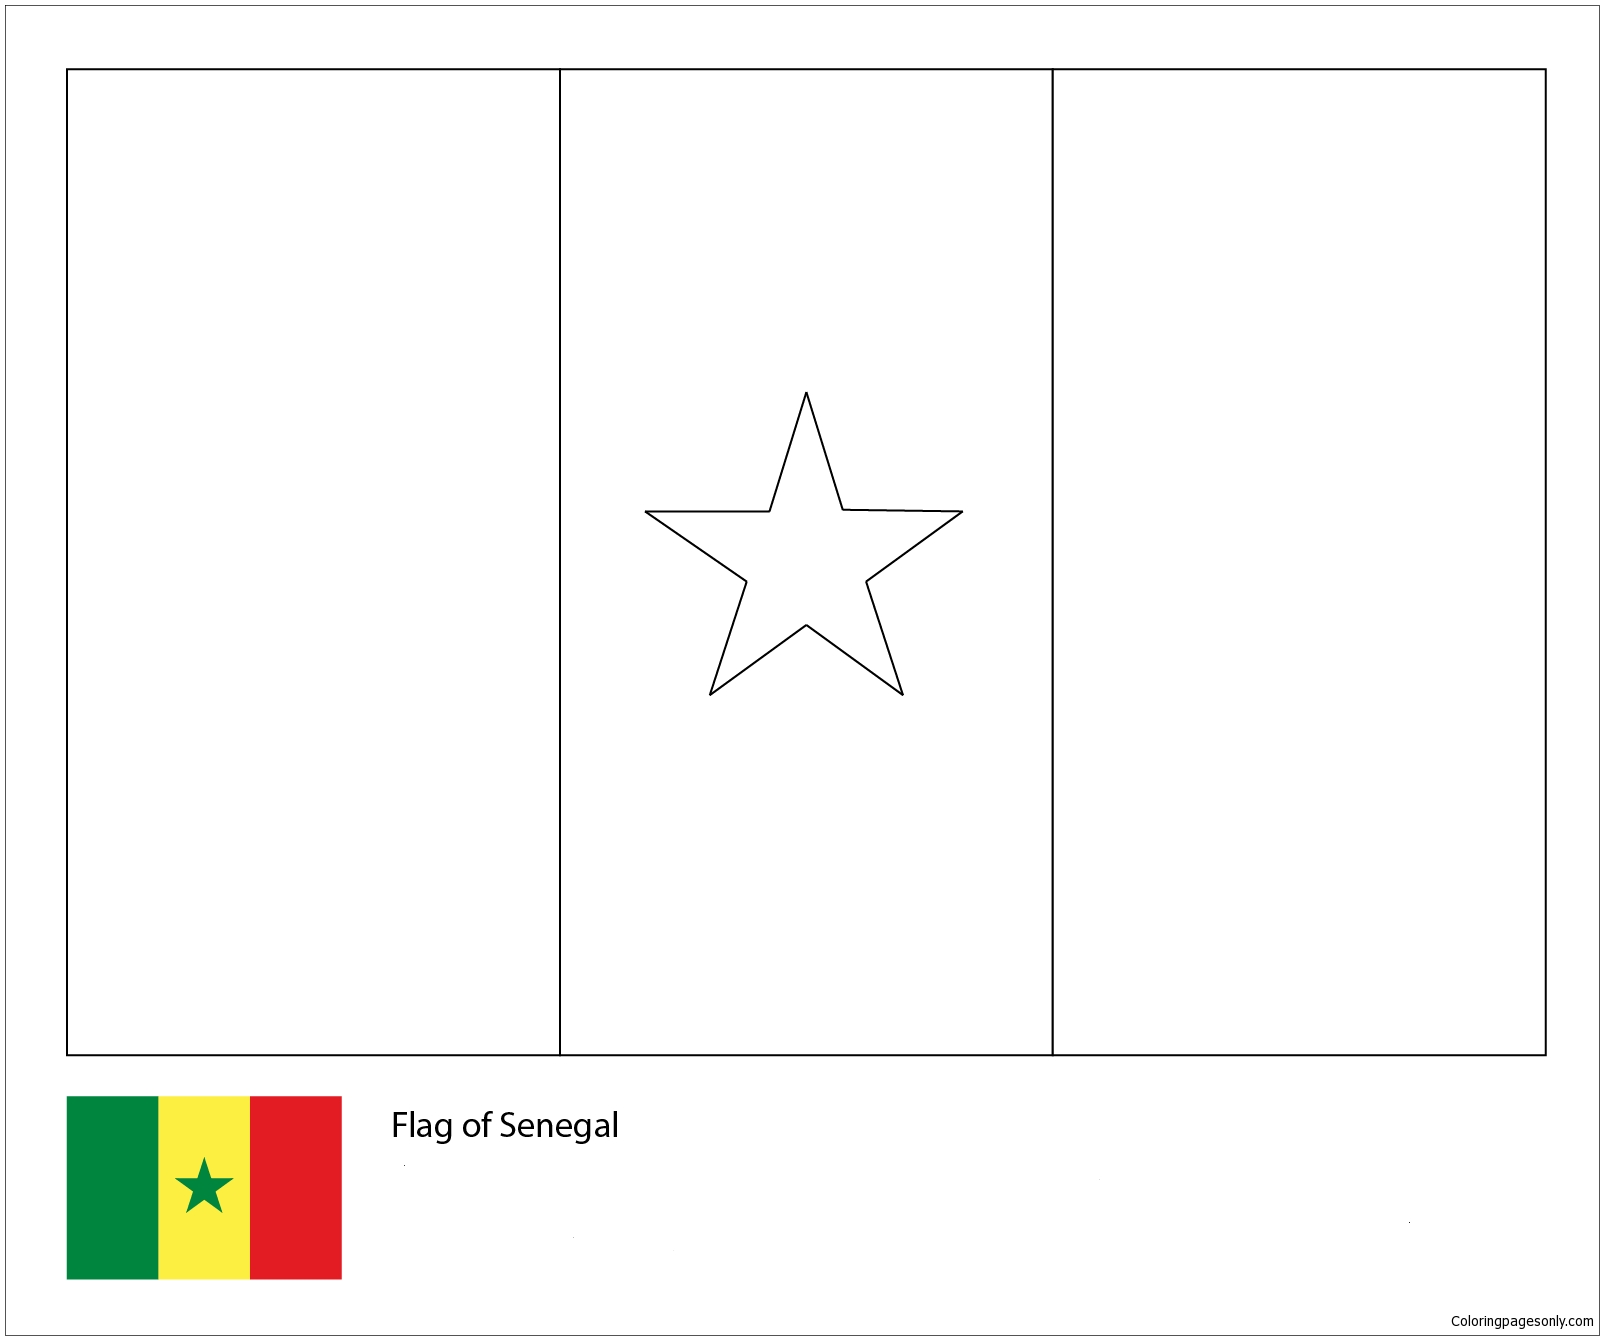 Флаг Сенегала-ЧМ-2018 из флагов ЧМ-2018